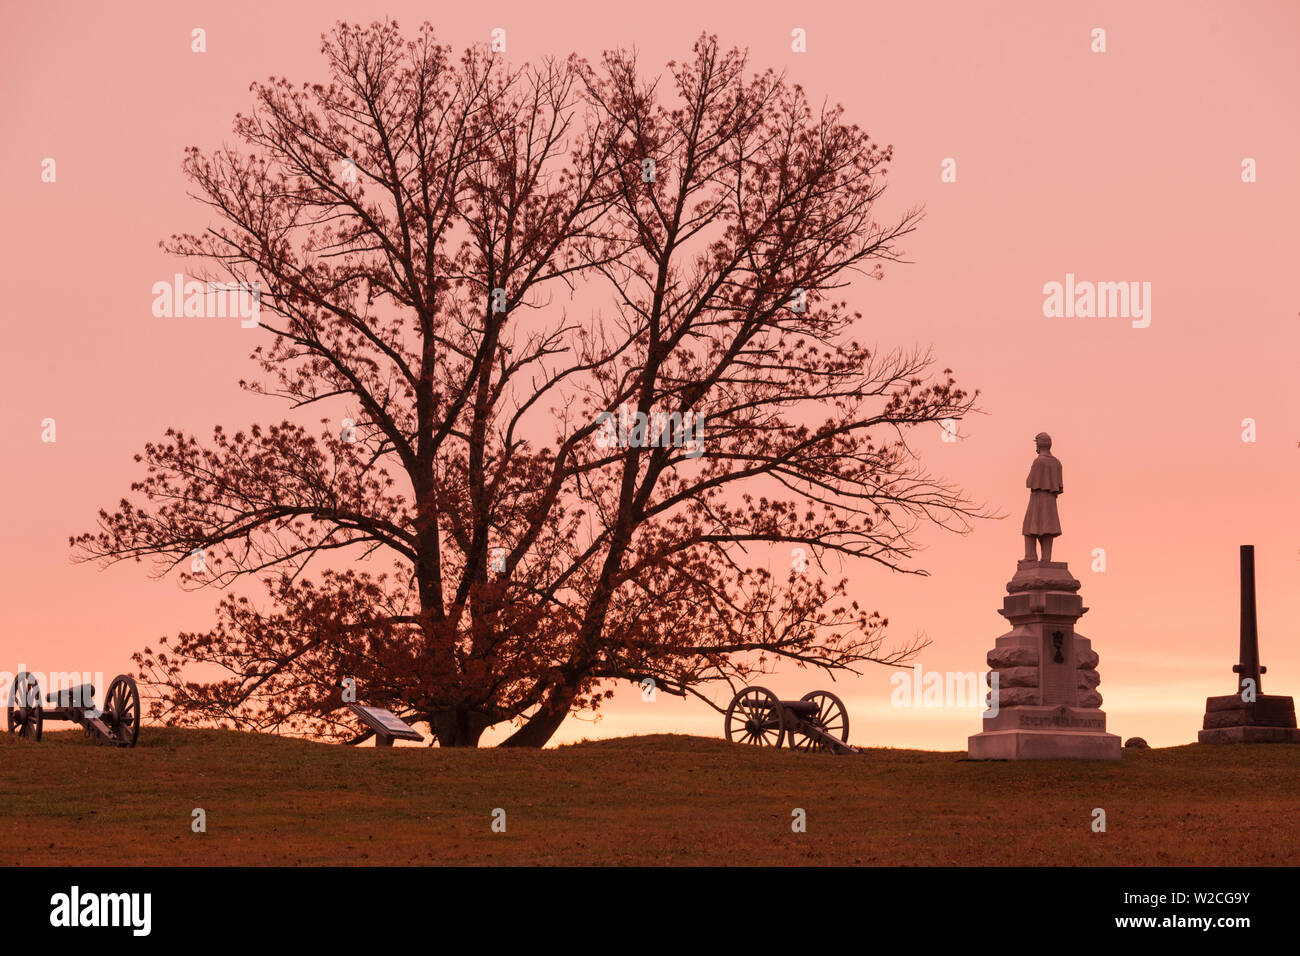 USA, Pennsylvania, Gettysburg, Battle of Gettysburg, tree and battlefield monument, dawn Stock Photo